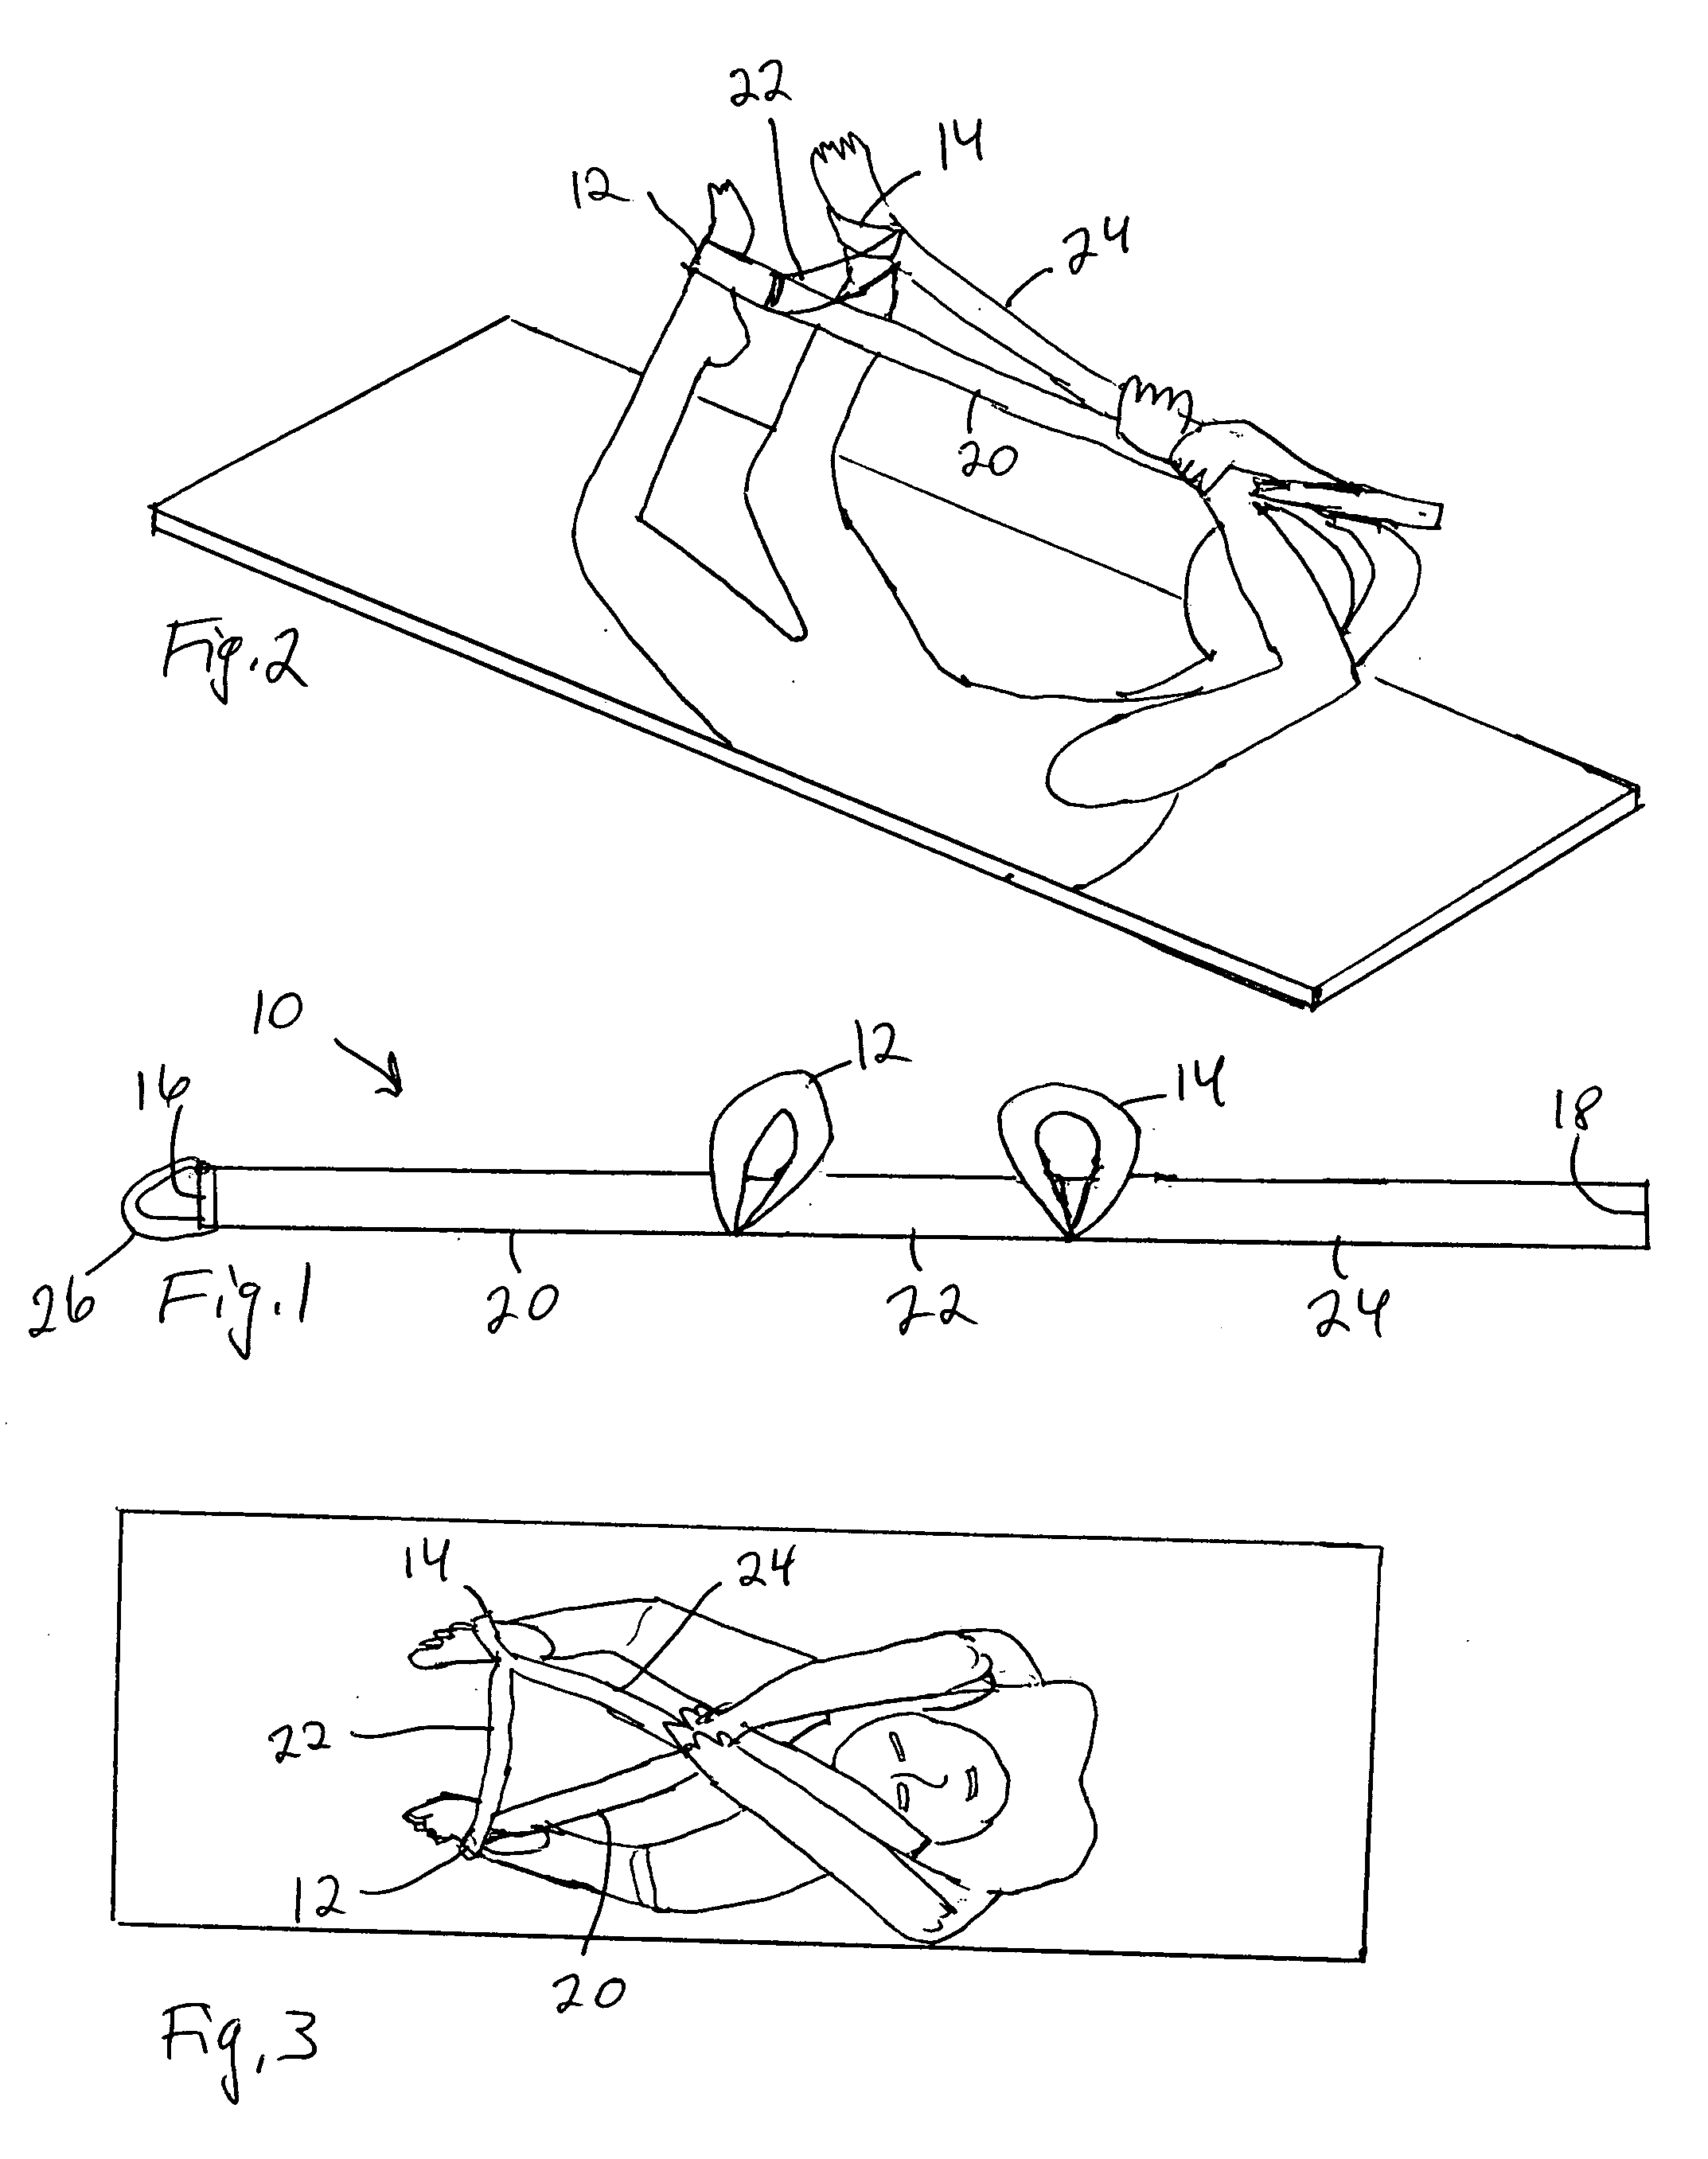 Yoga belt and method of use